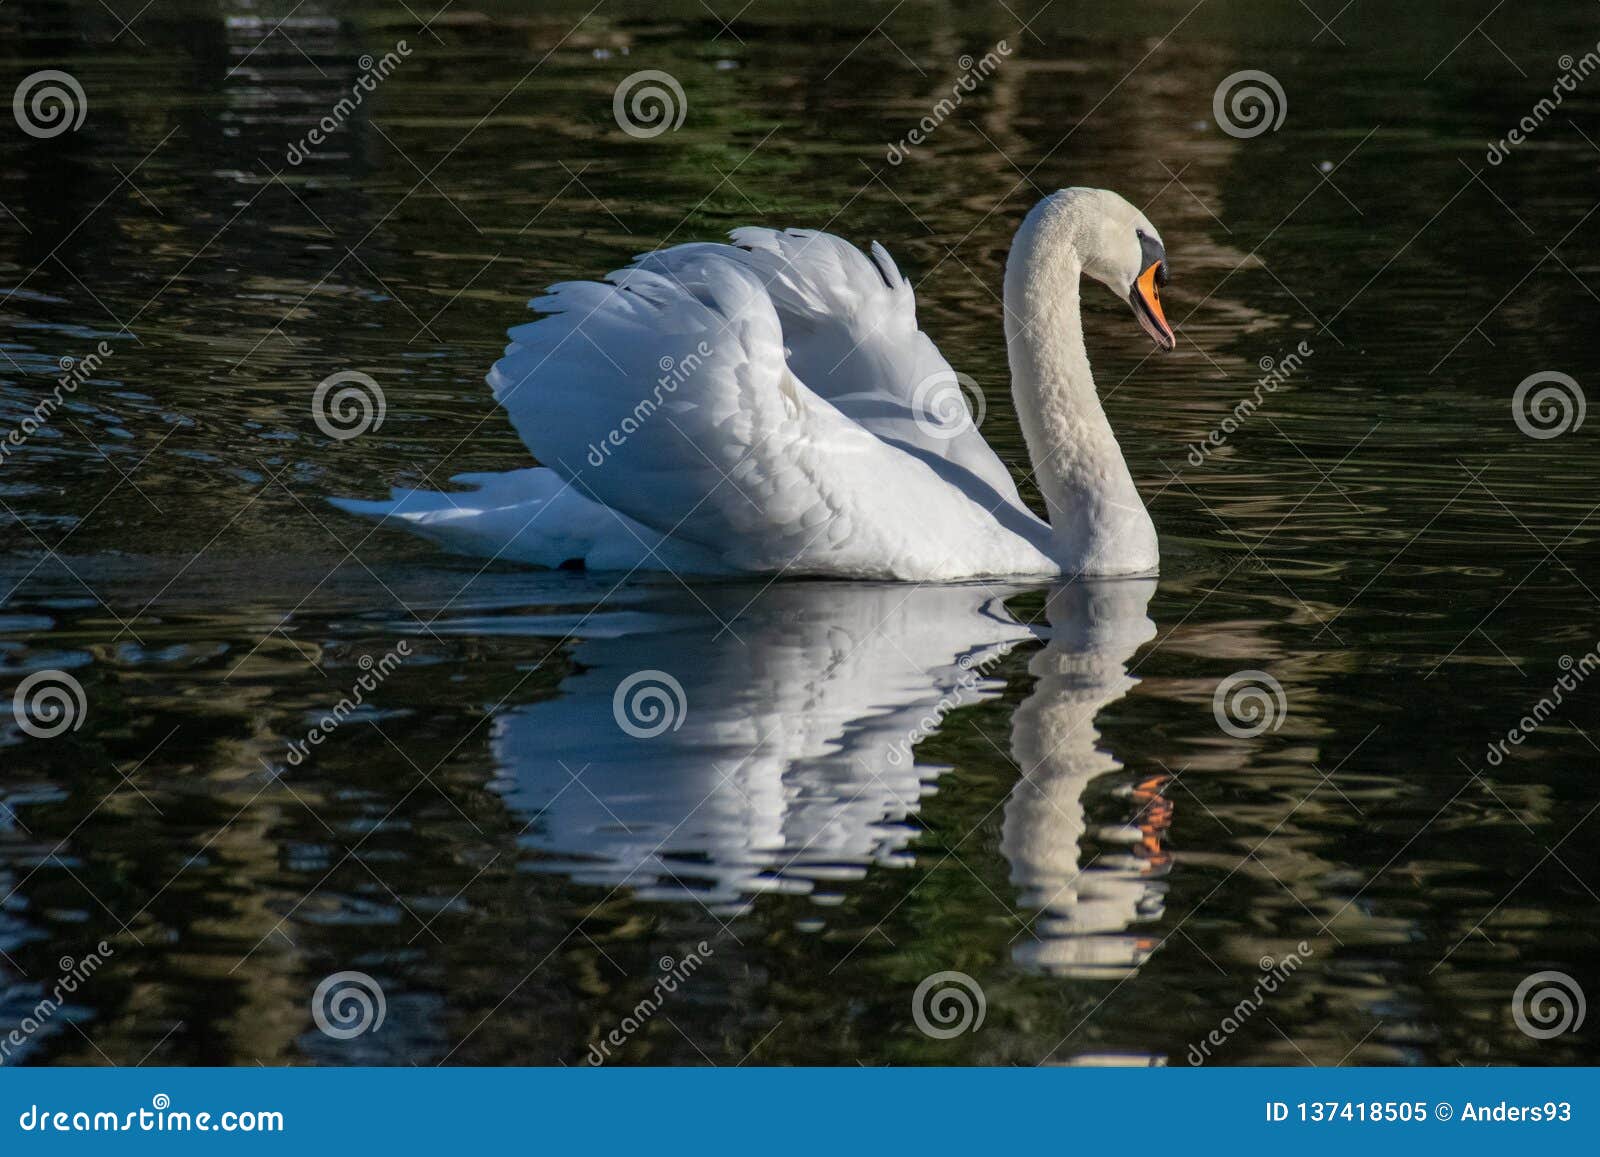 mute swan reflection winter adult mute swan showing agression busking pose reflection still lake 137418505